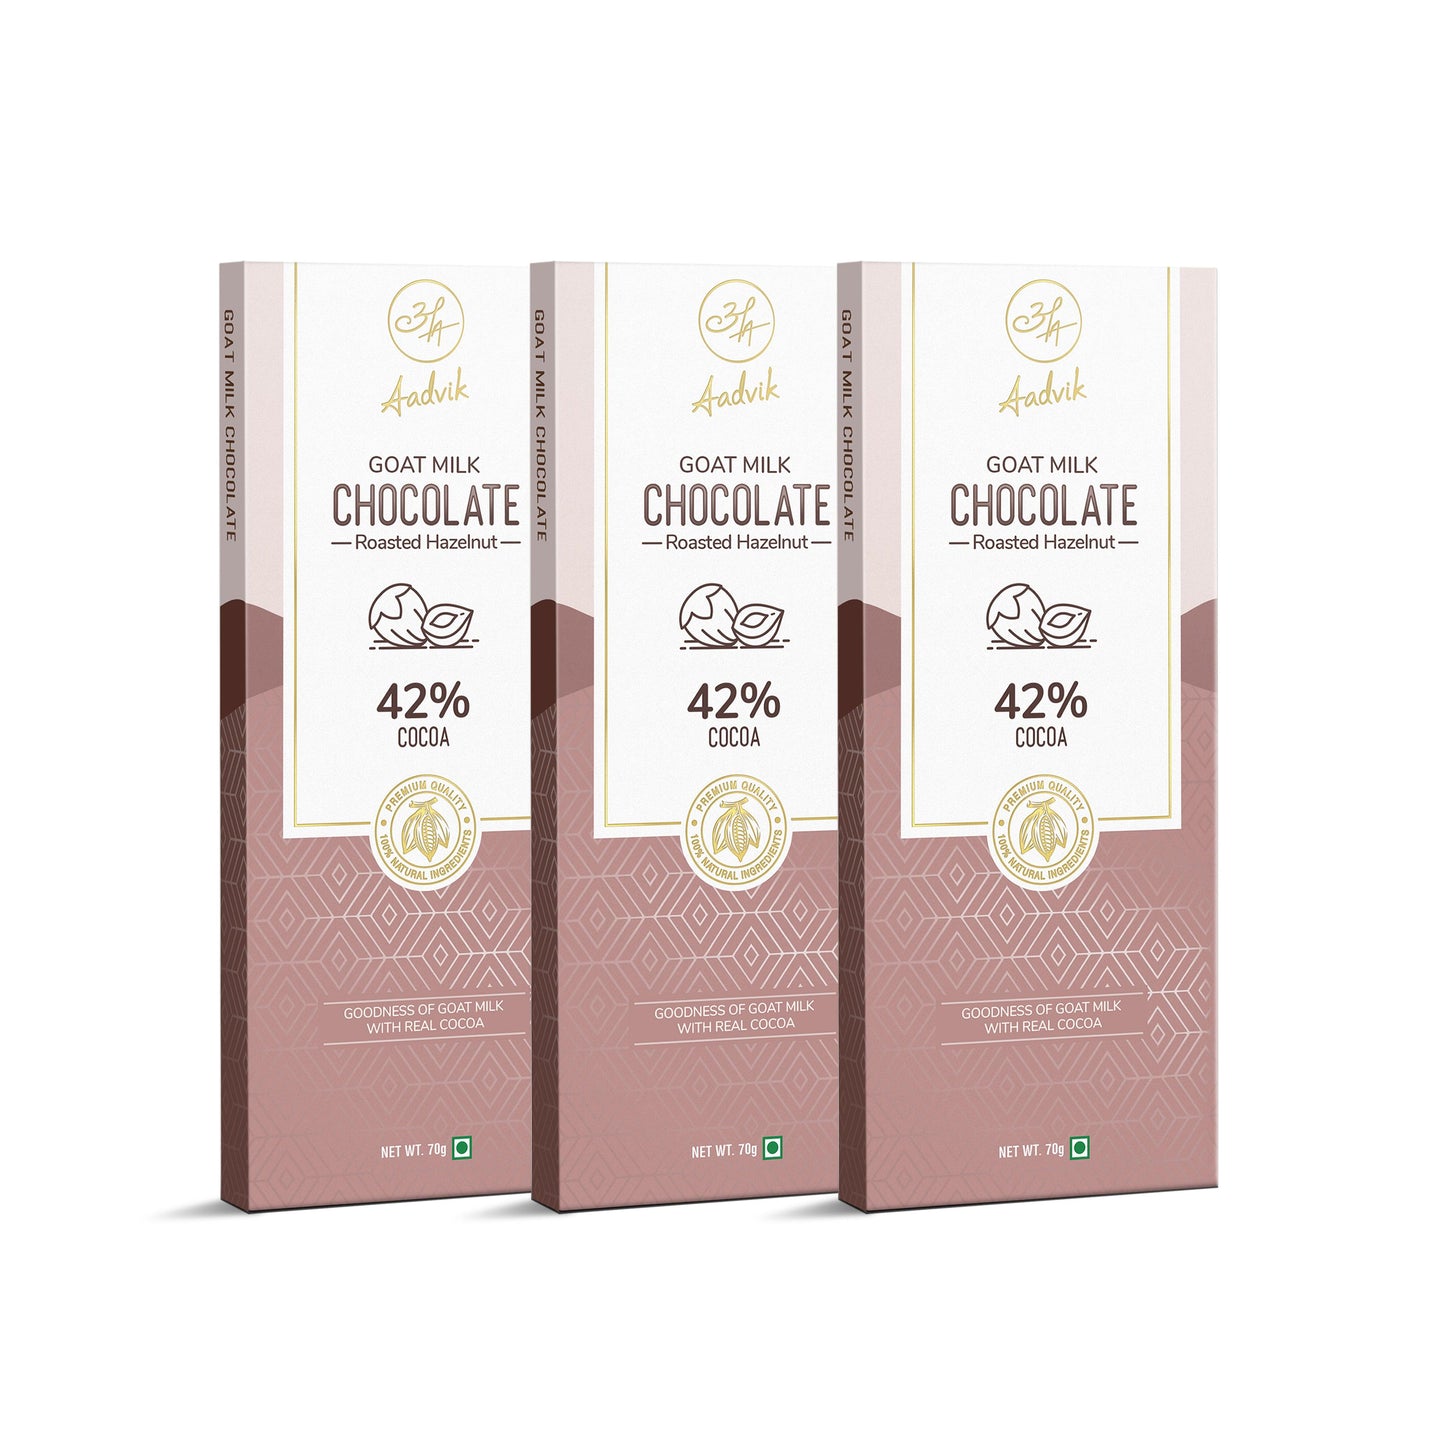 Goat Milk Chocolate | A Shark Tank Product | Roasted Hazelnut | 70g - Aadvik Foods